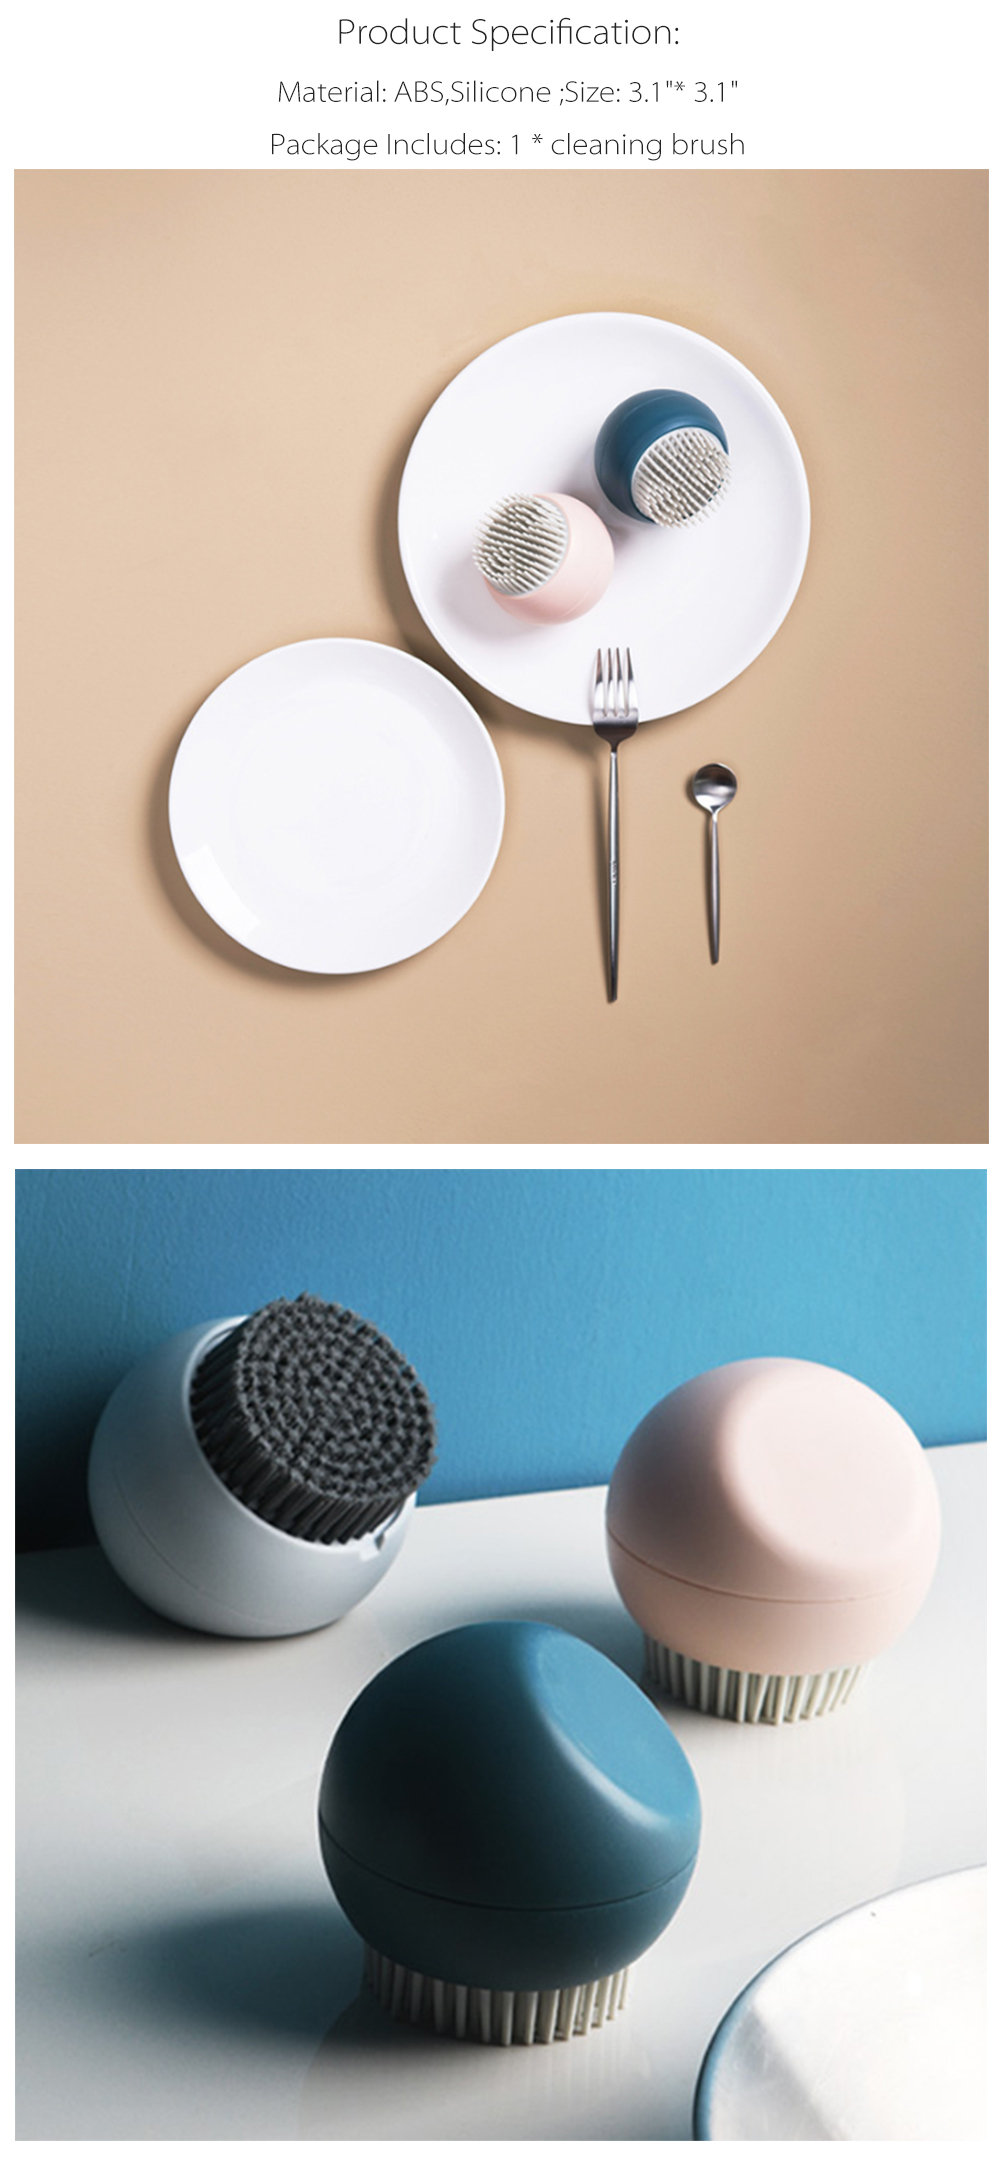 Mini Dish Cleaning Brush - Silicone - Pink - Blue - ApolloBox